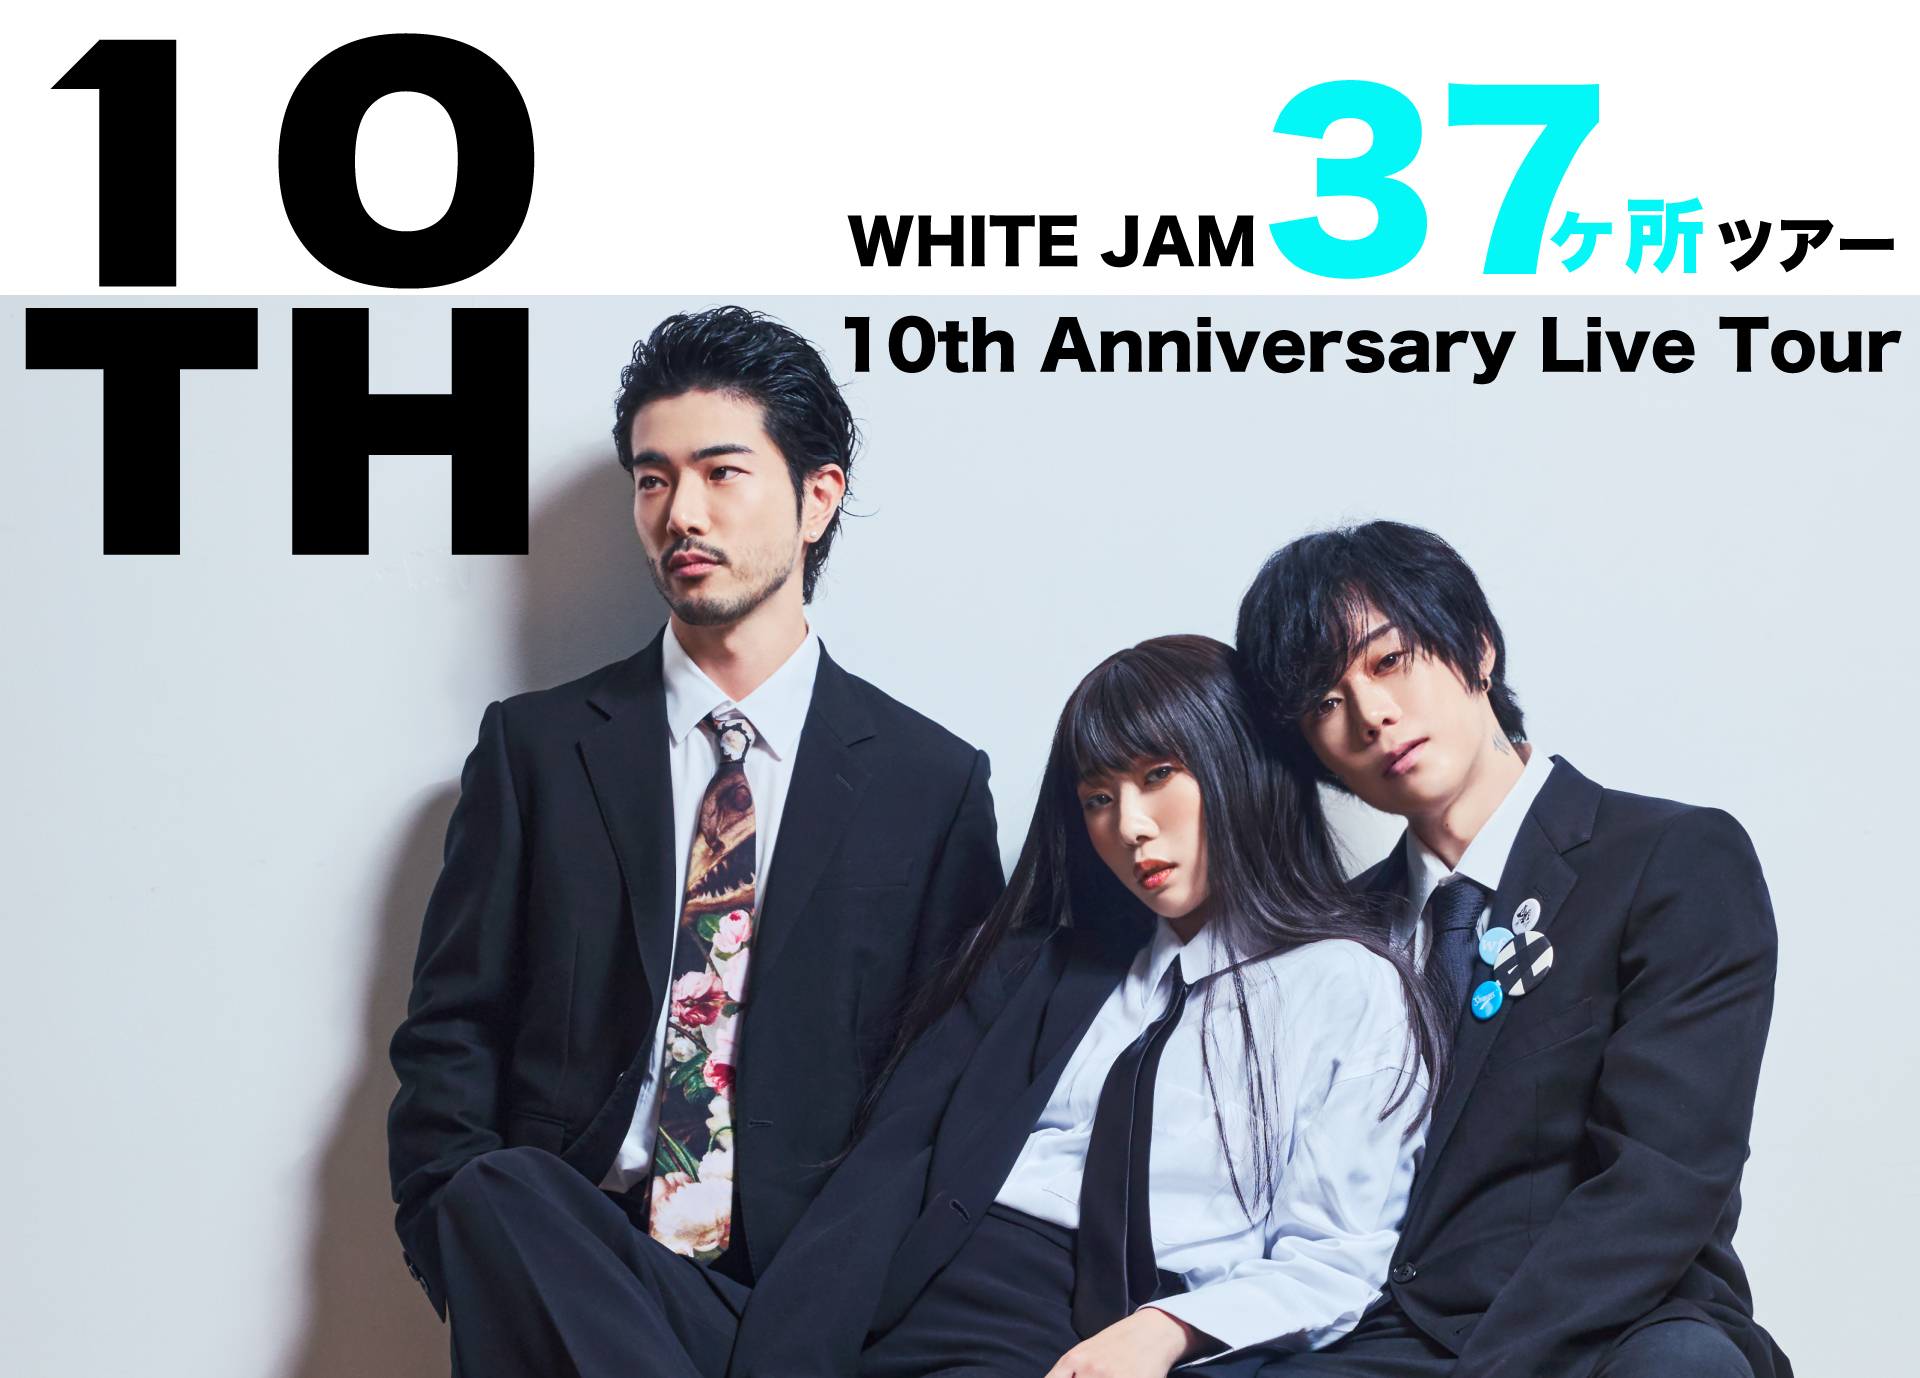 WHITE JAM WHITE JAM 37ヶ所ツアー ～10th Anniversary Live Tour～